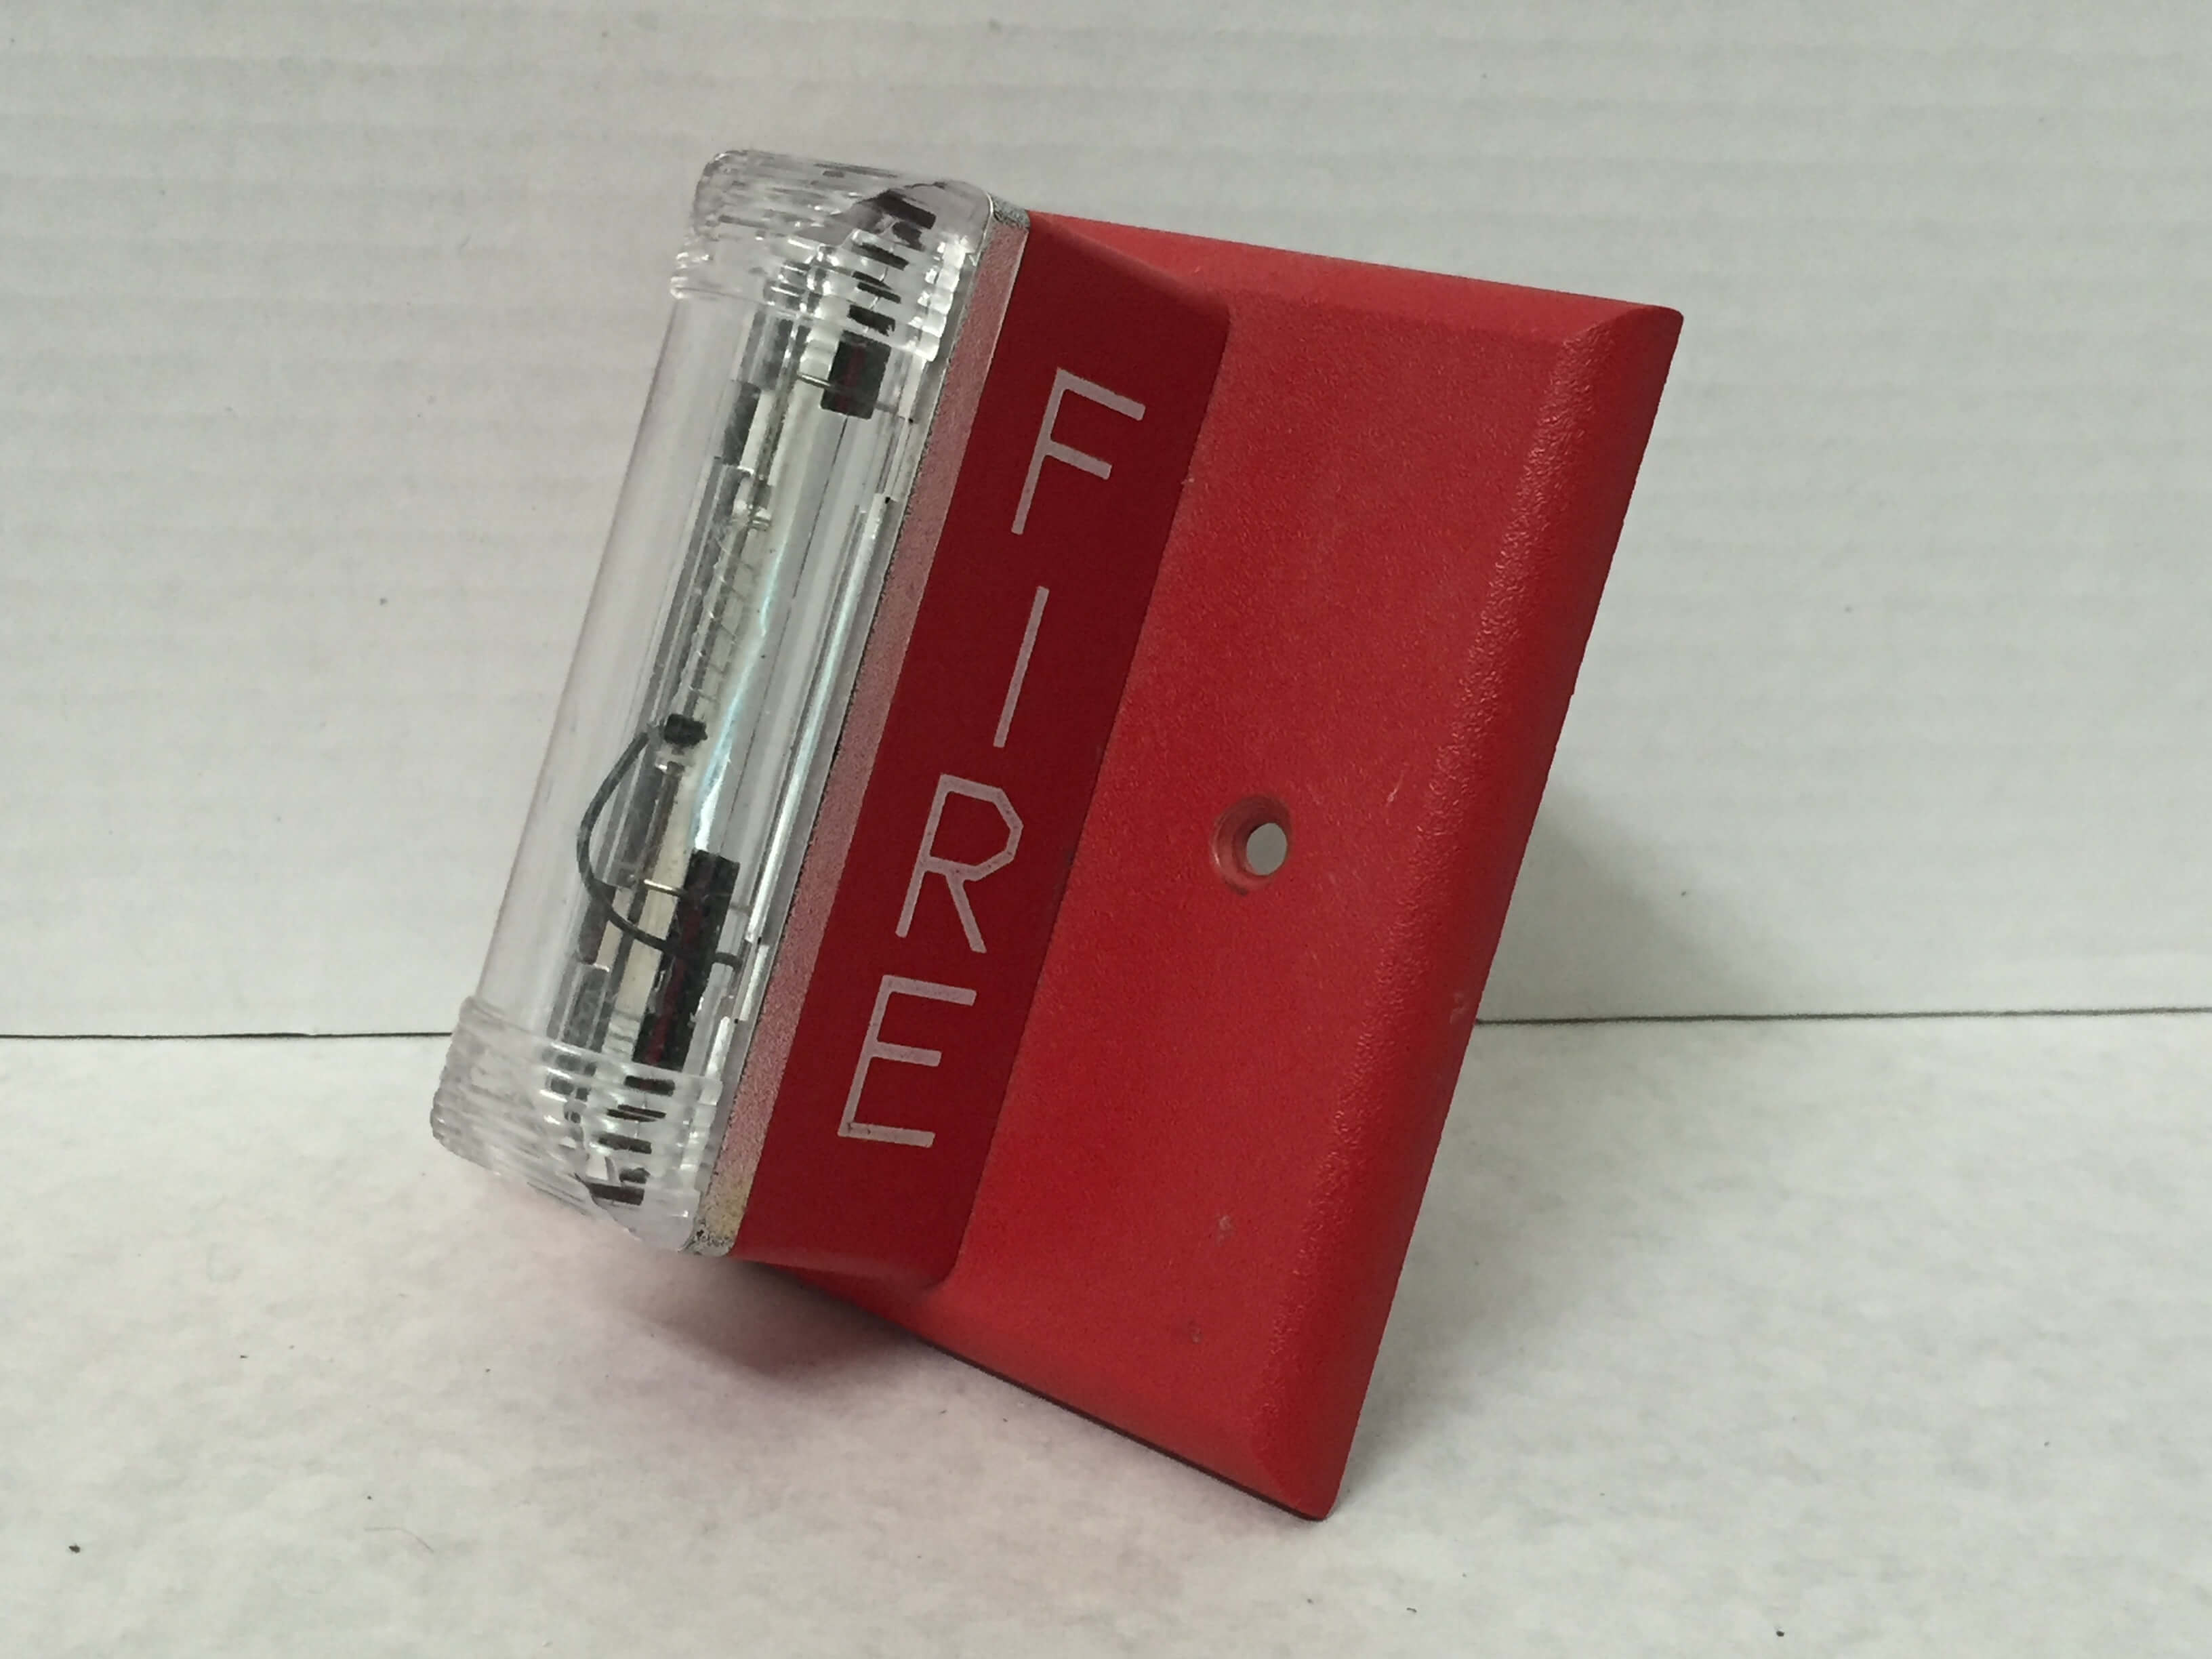 *New* Gentex Fire Alarm Strobe Model GXS-4-1575-WR Red Wall Mount 